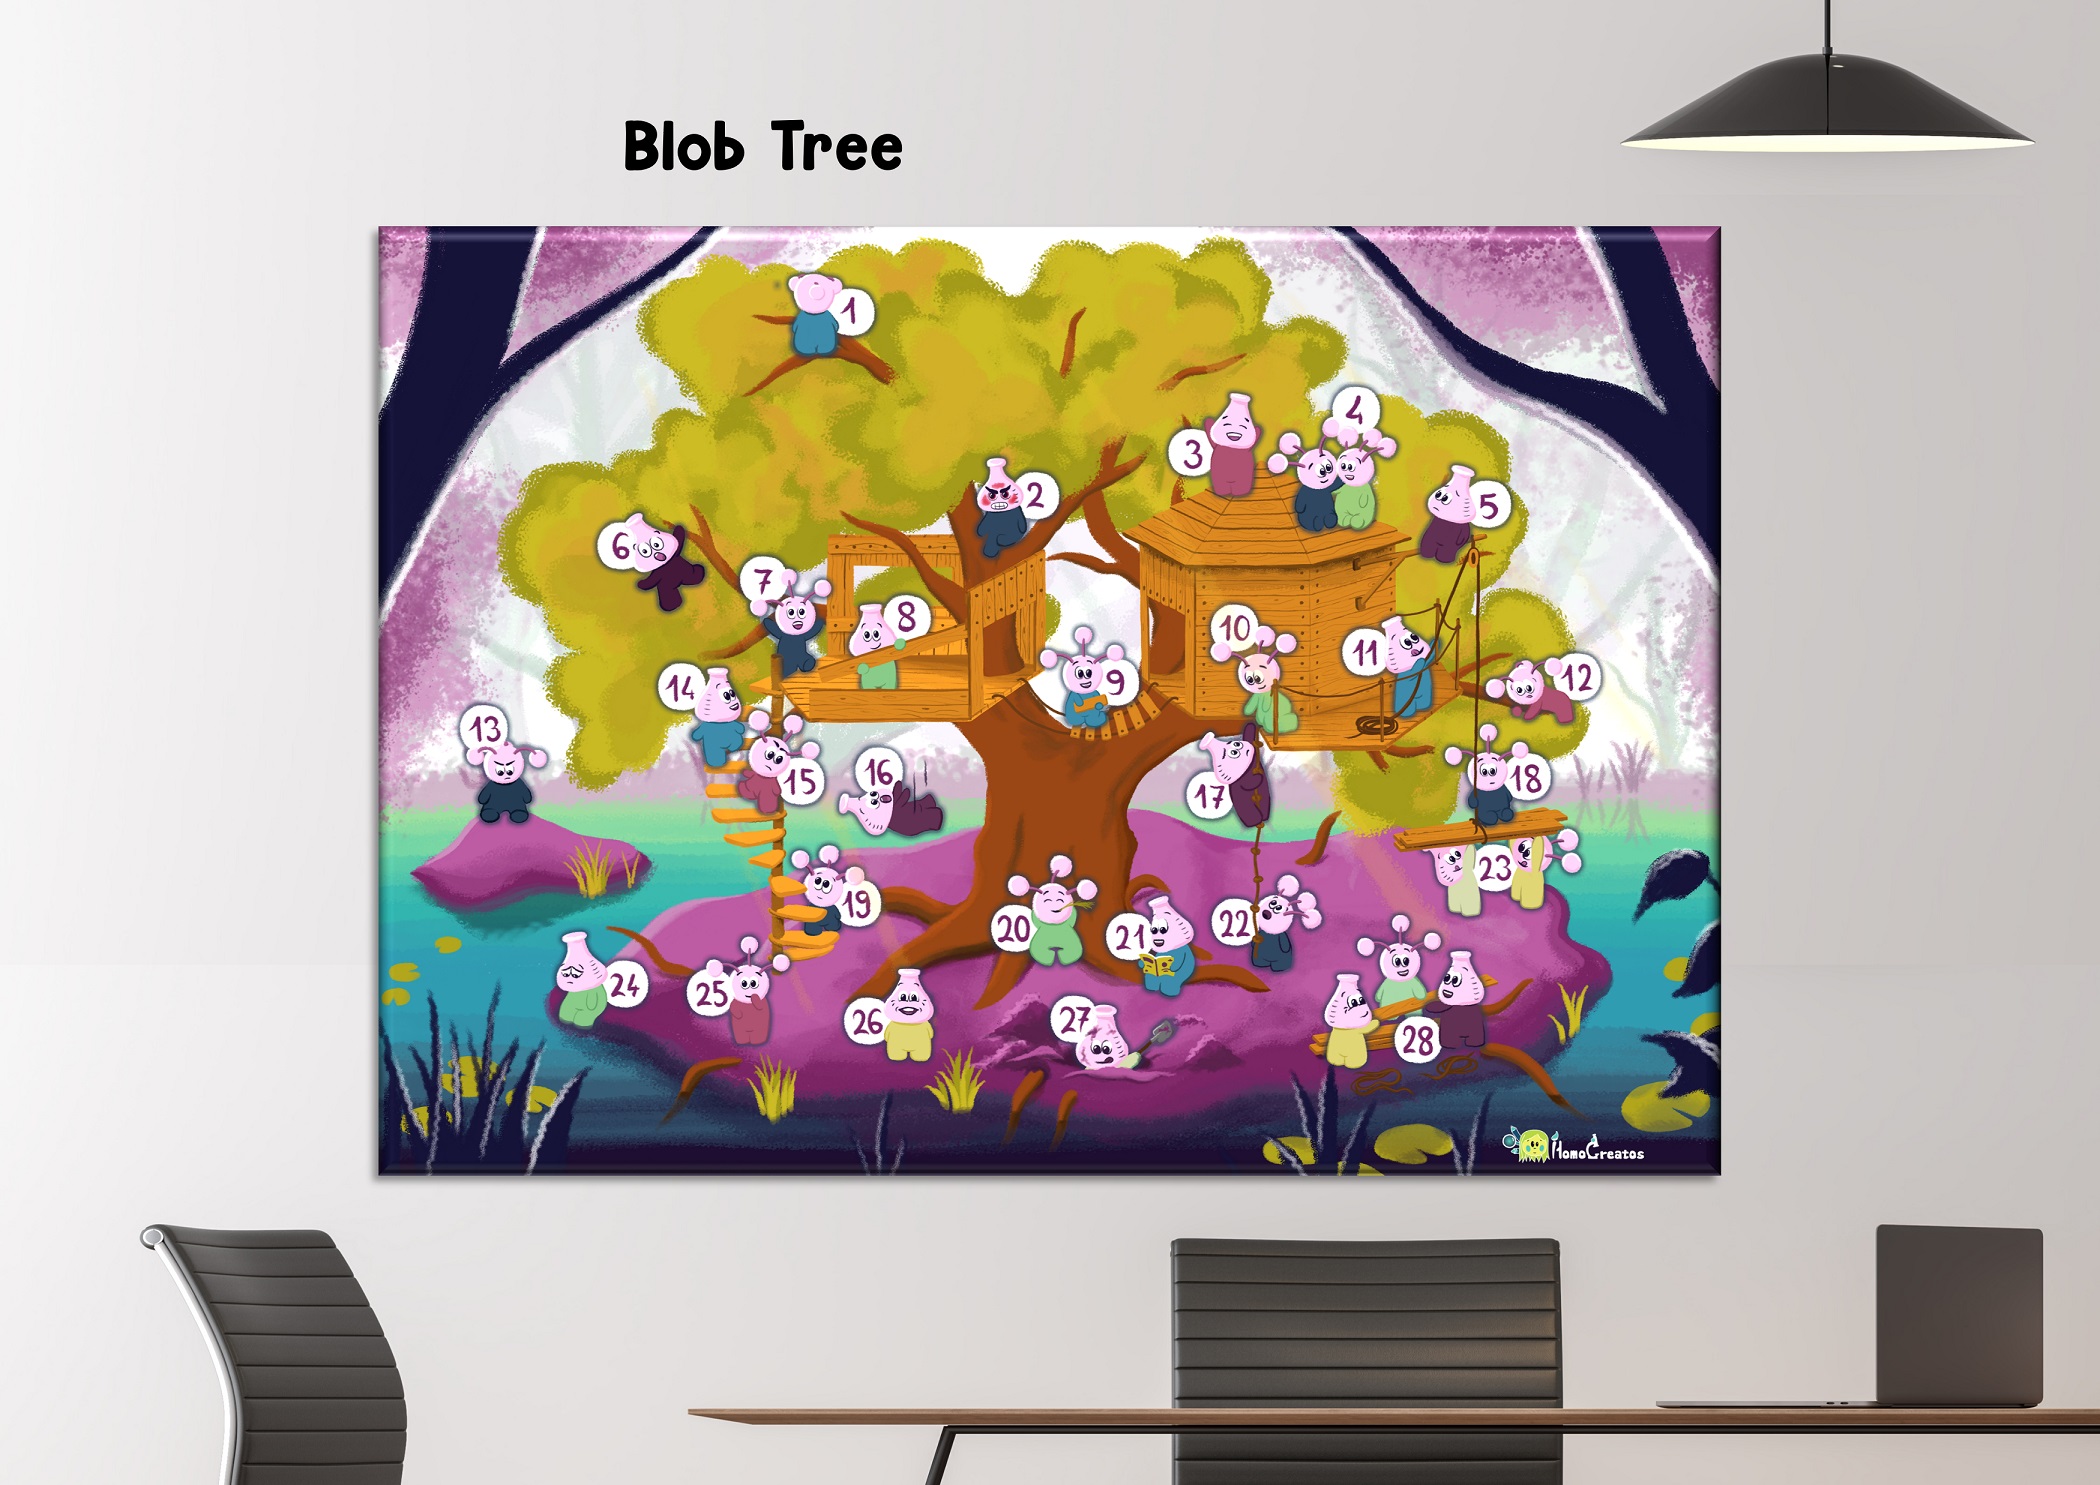 Blob tree